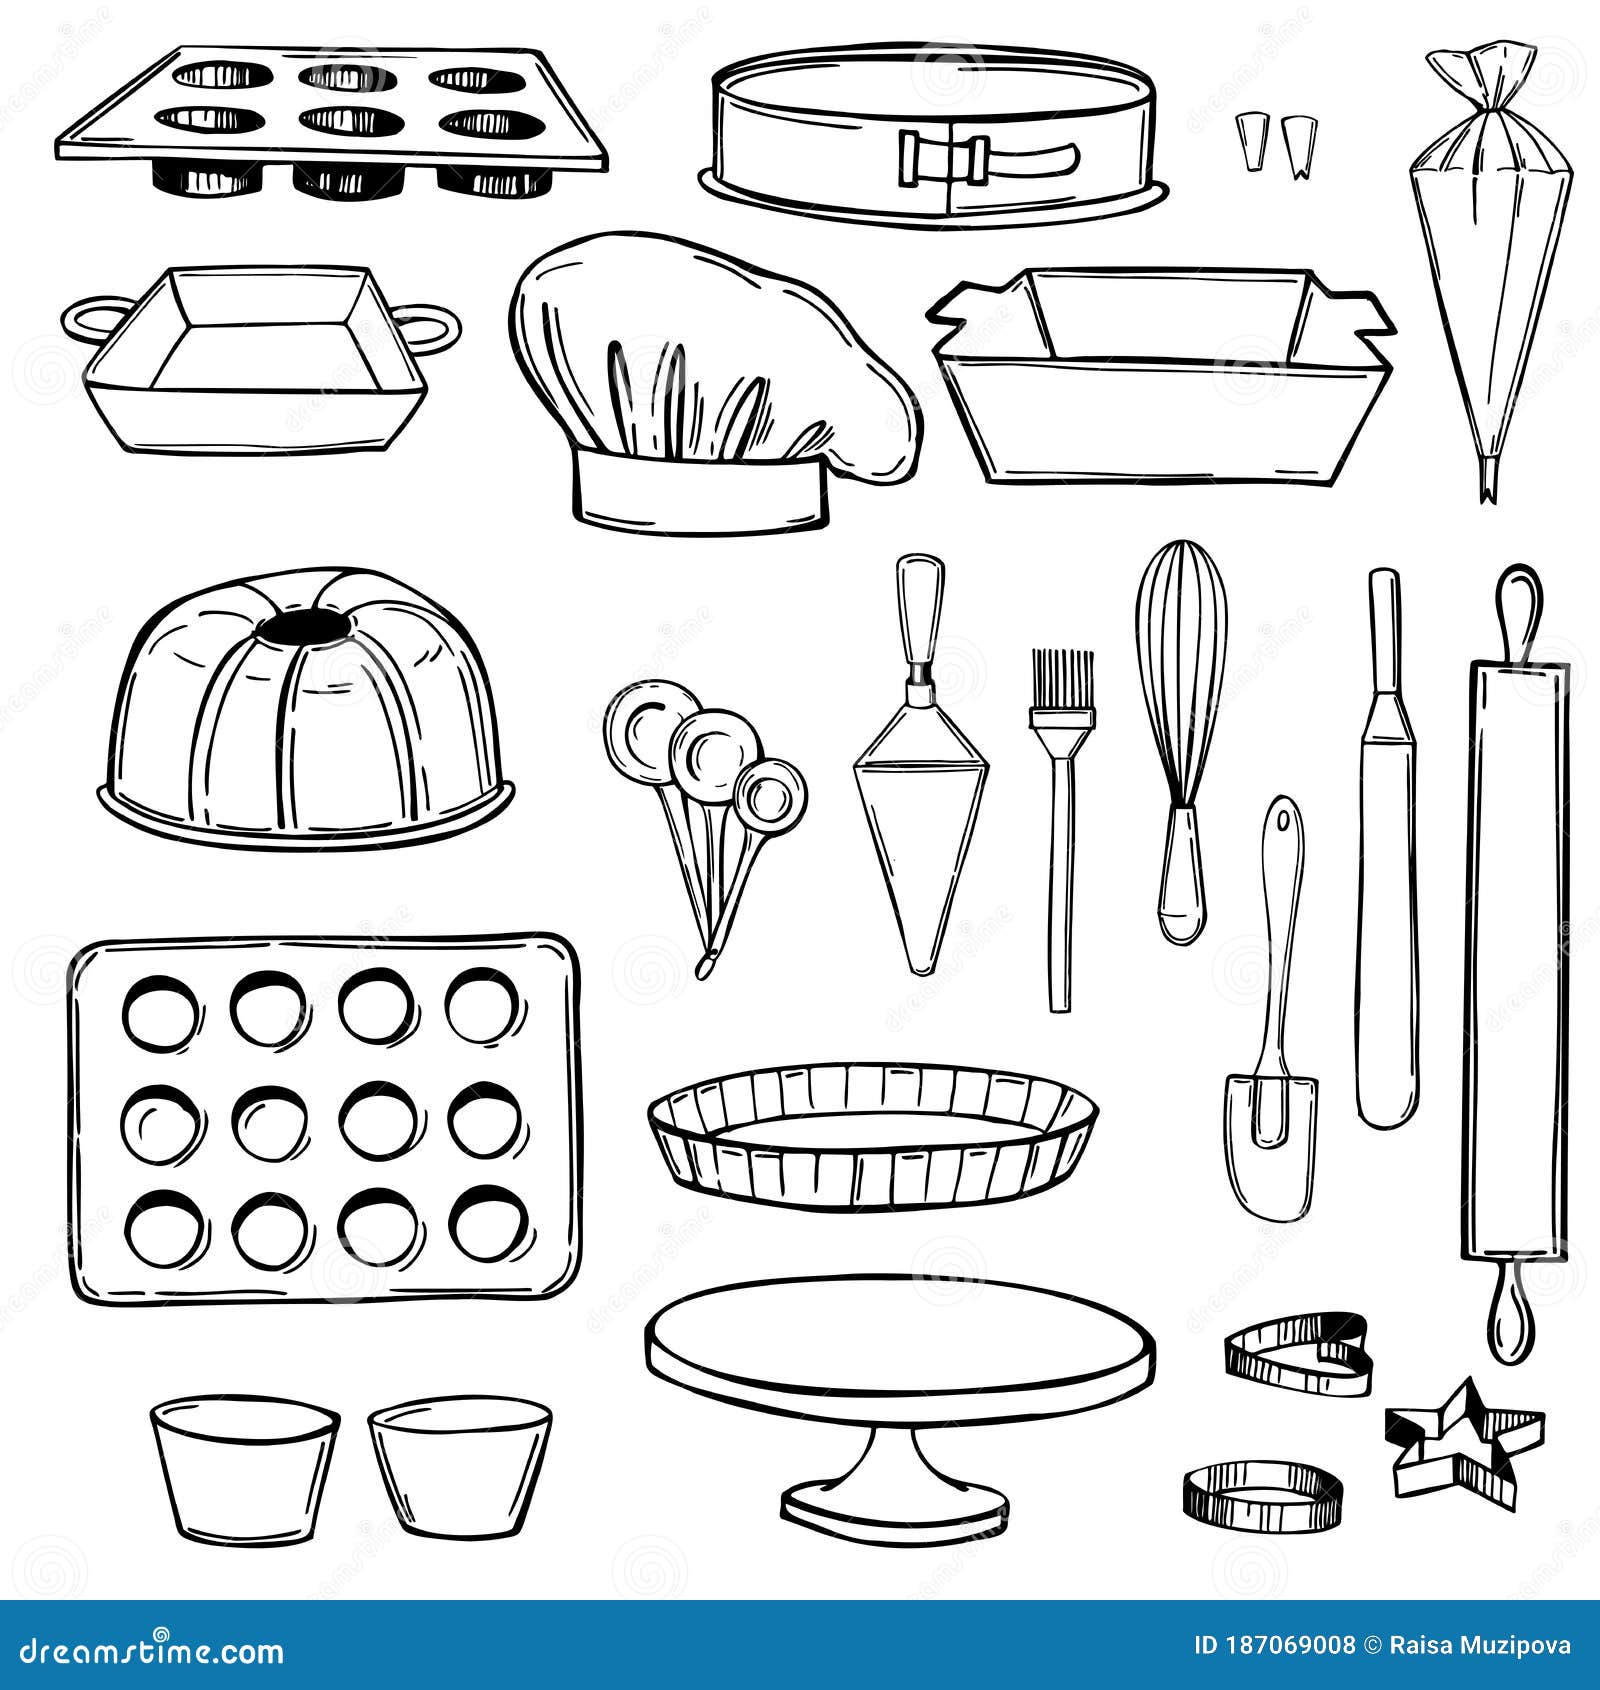 Baking ingredients and kitchen tools utensils Vector Image